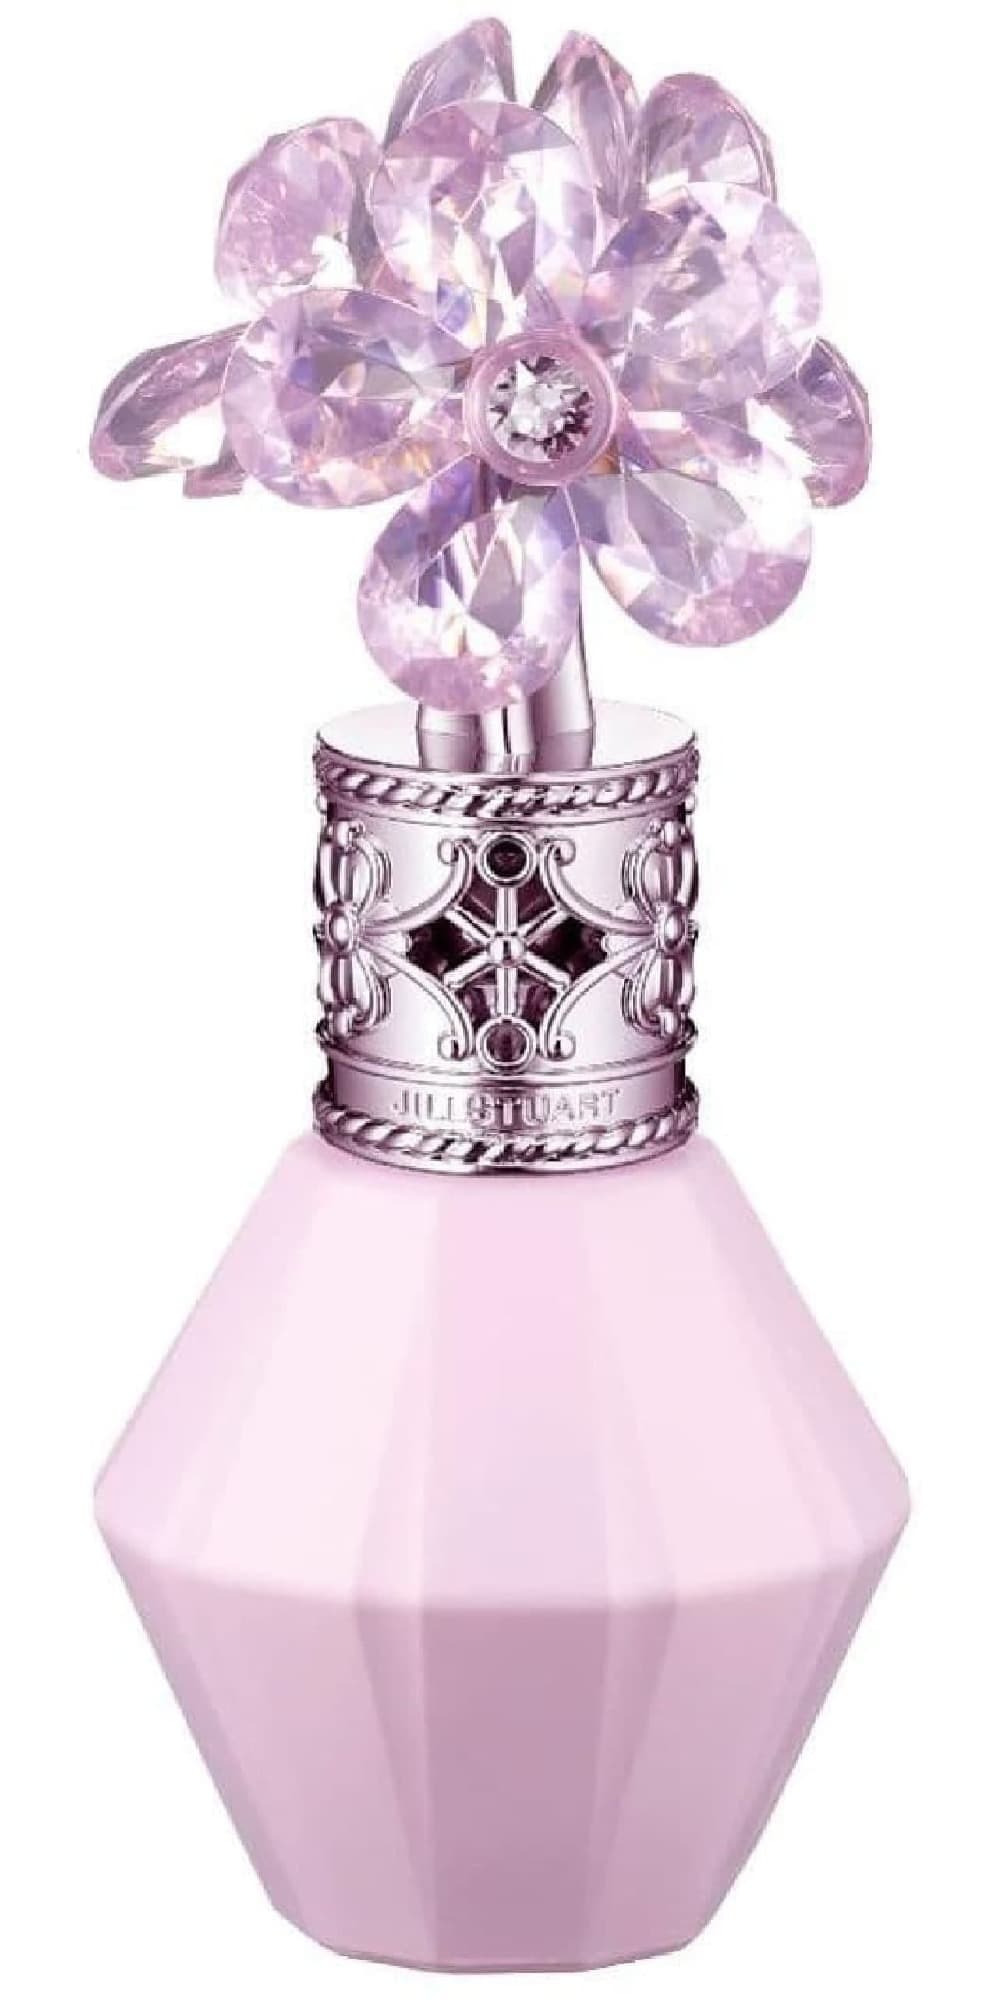 Jill Stuart Crystal Bloom Sakura Bouquet Eau de Parfum